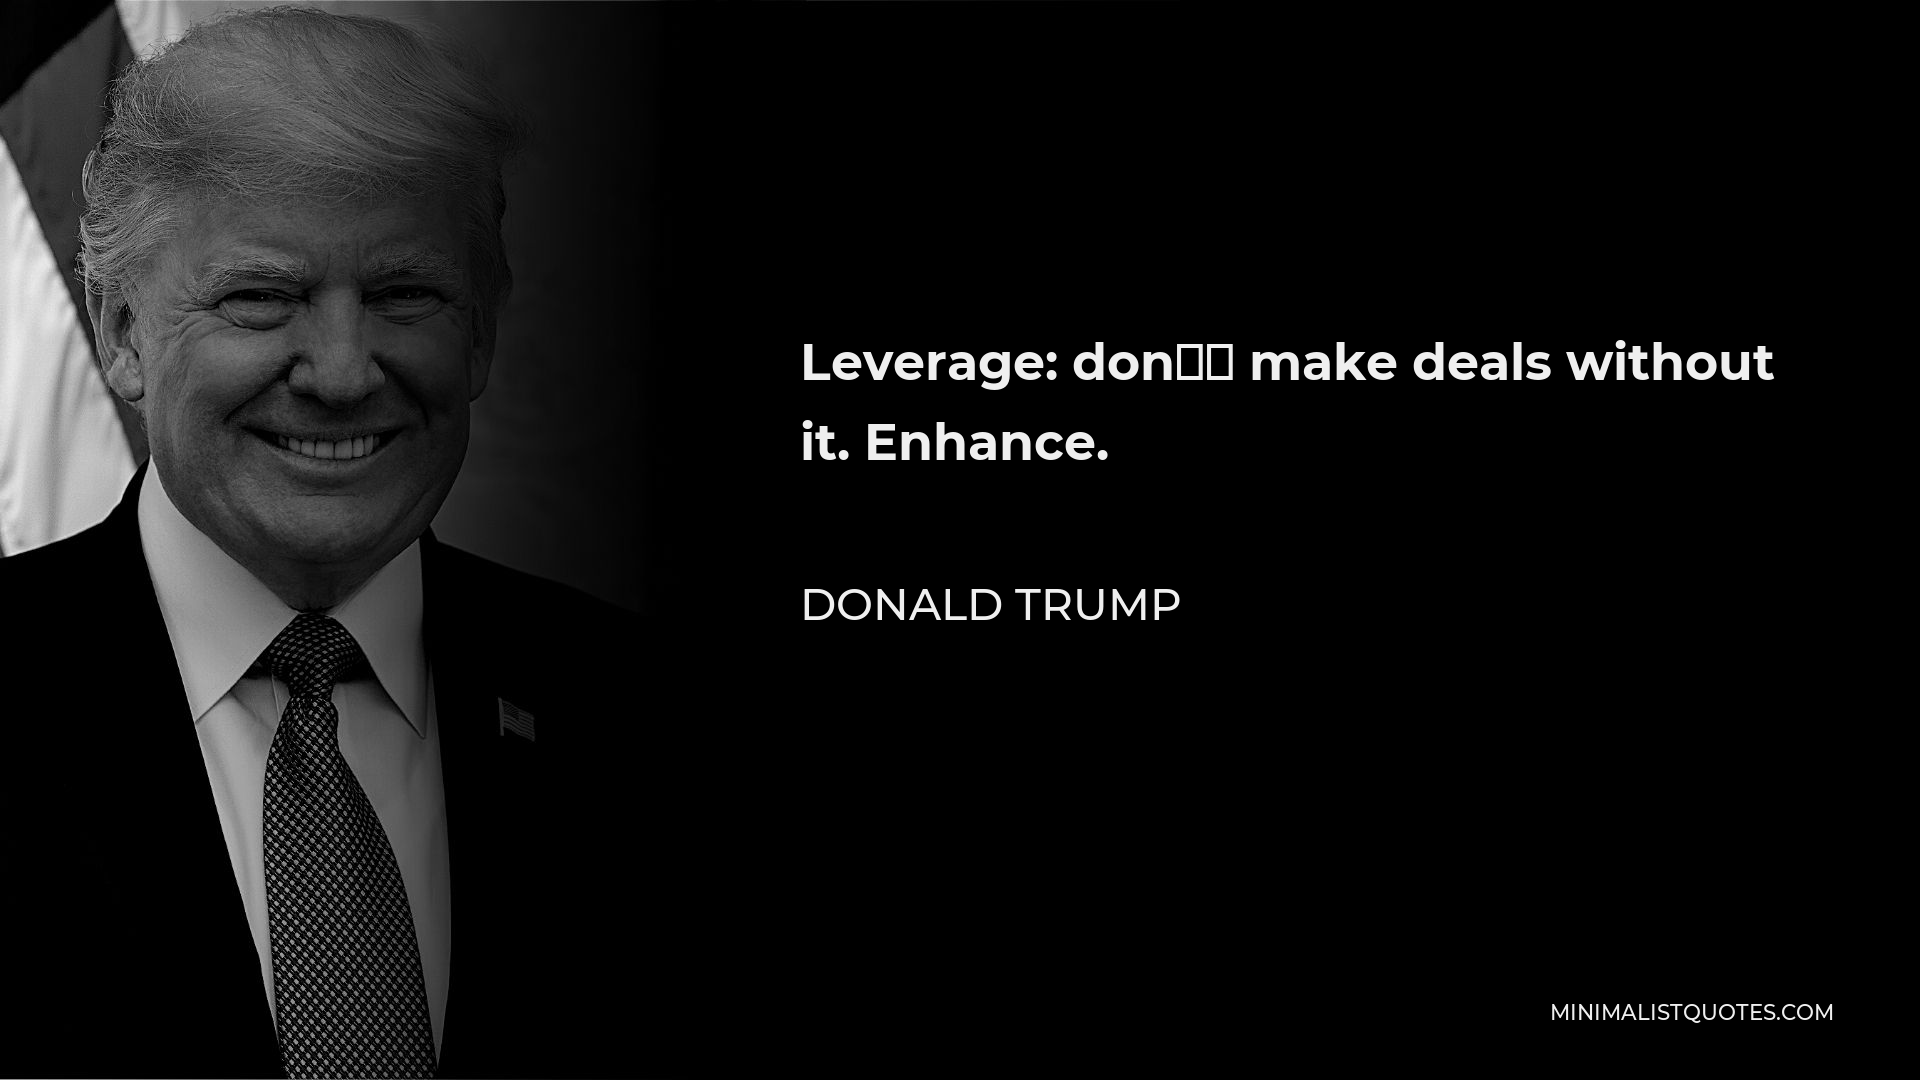 Donald Trump Quote - Leverage: don’t make deals without it. Enhance.